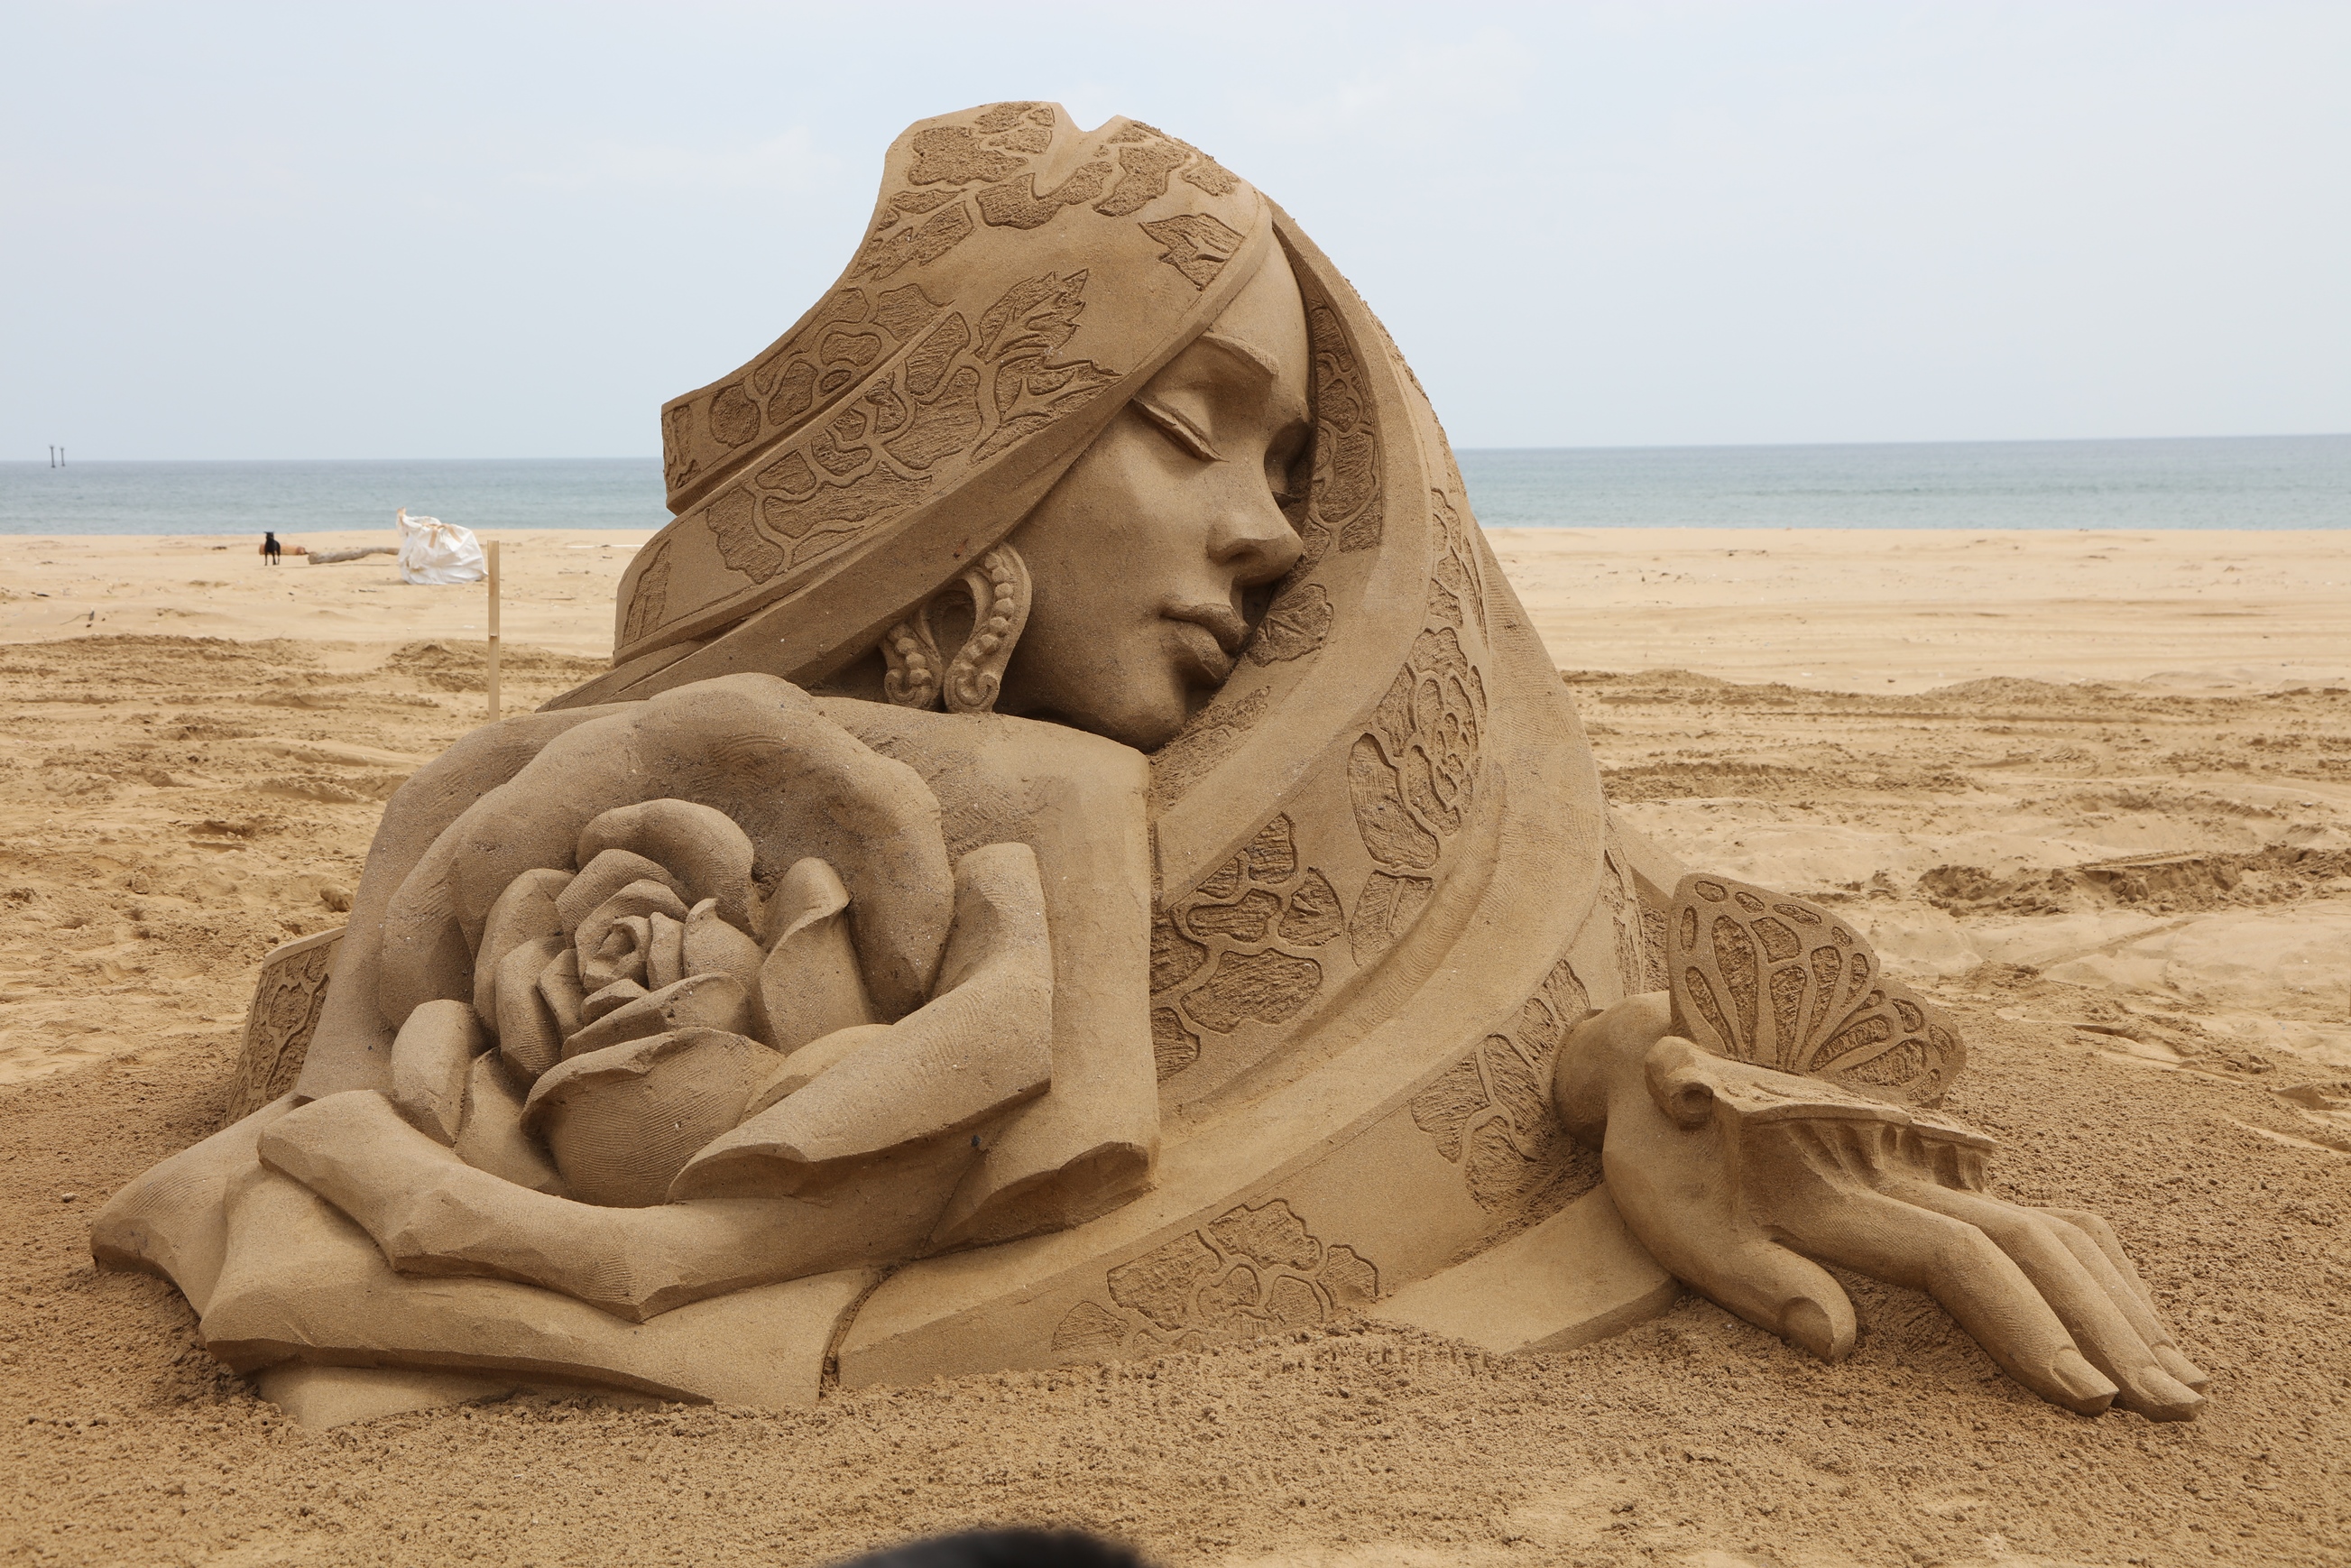 "Divine Beauty", 3rd place in Taiwan's International Sand Sculpture contest, artist Wang Jie